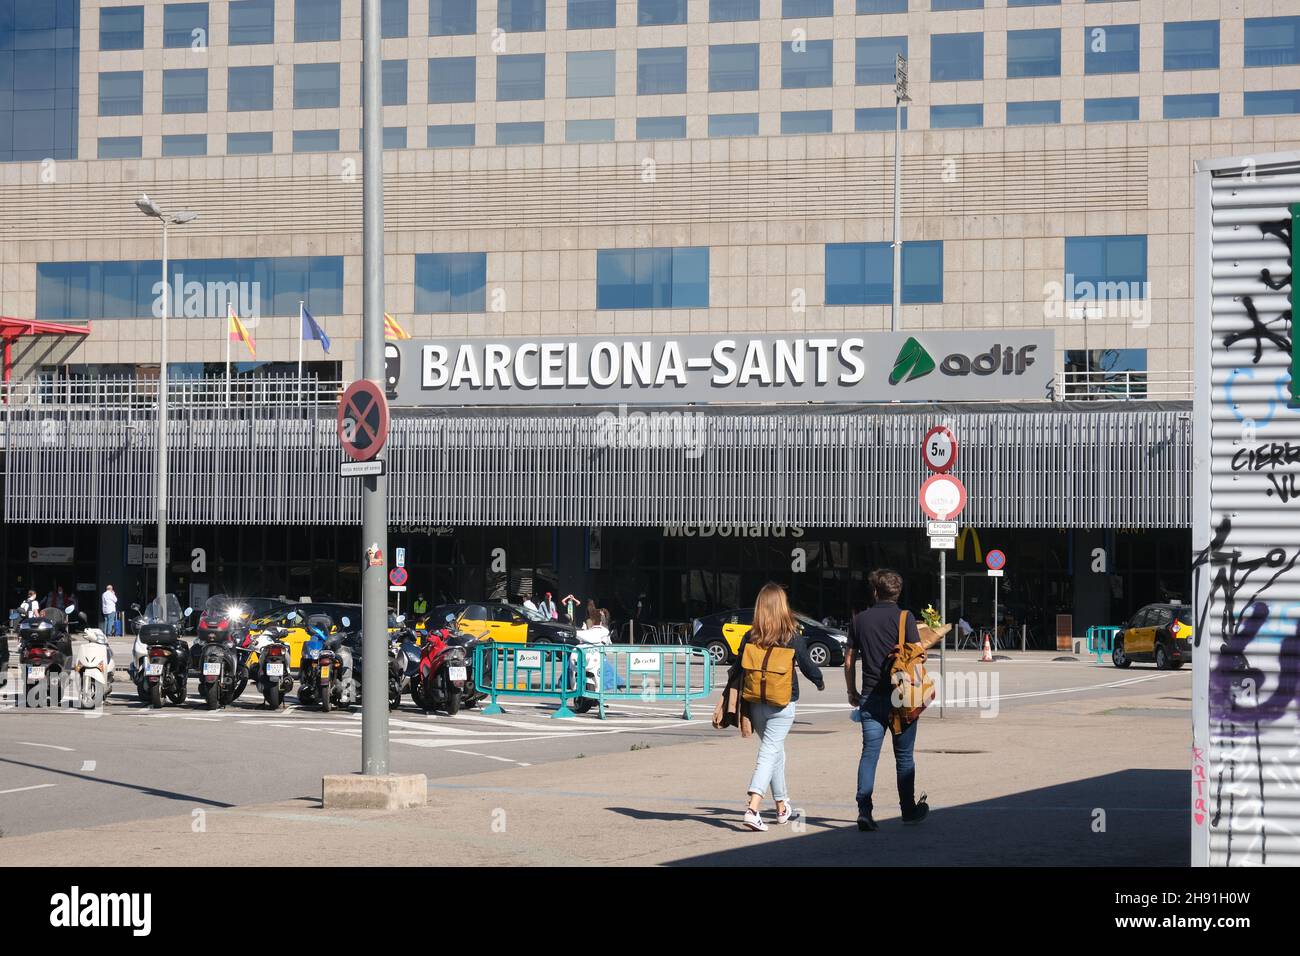 Barcelona, Spain - 5 November 2021: Barcelona-Sants bus station with adif logo, Illustrative Editorial. Stock Photo